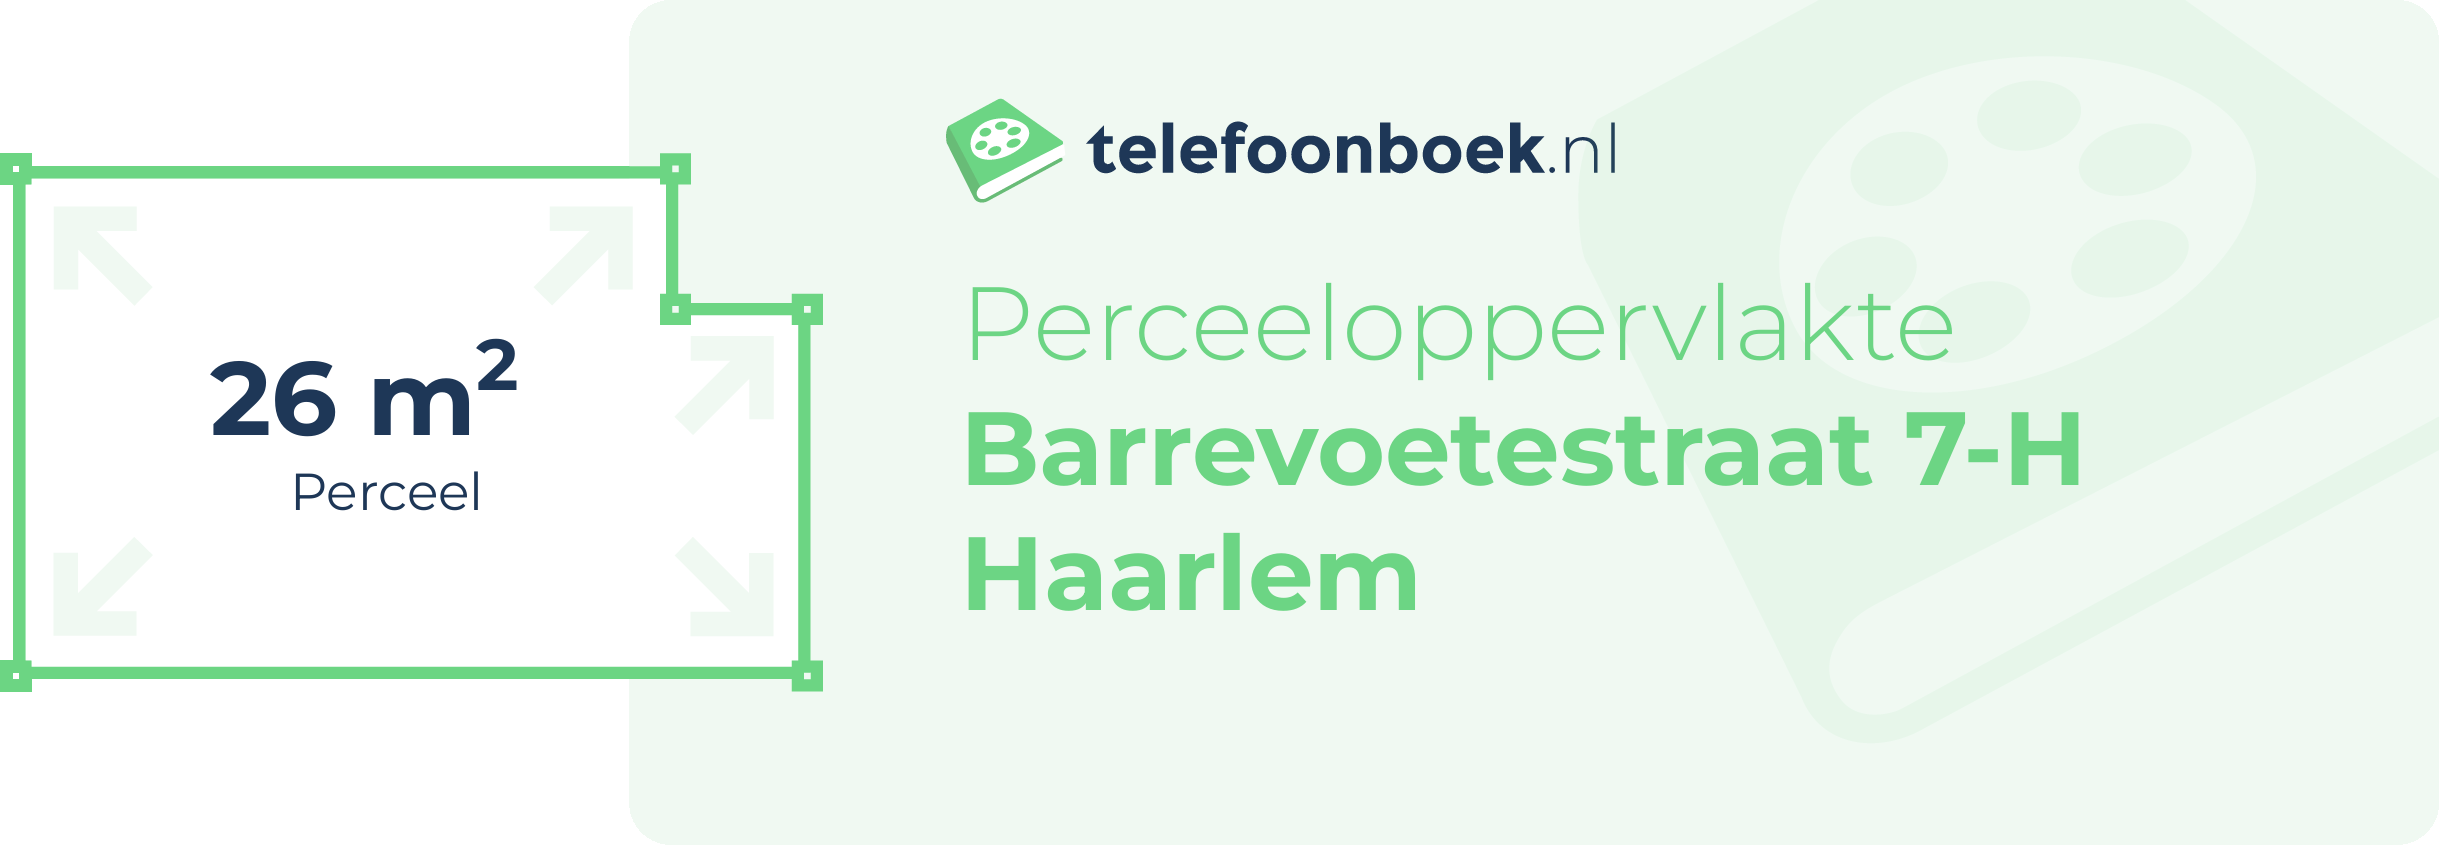 Perceeloppervlakte Barrevoetestraat 7-H Haarlem